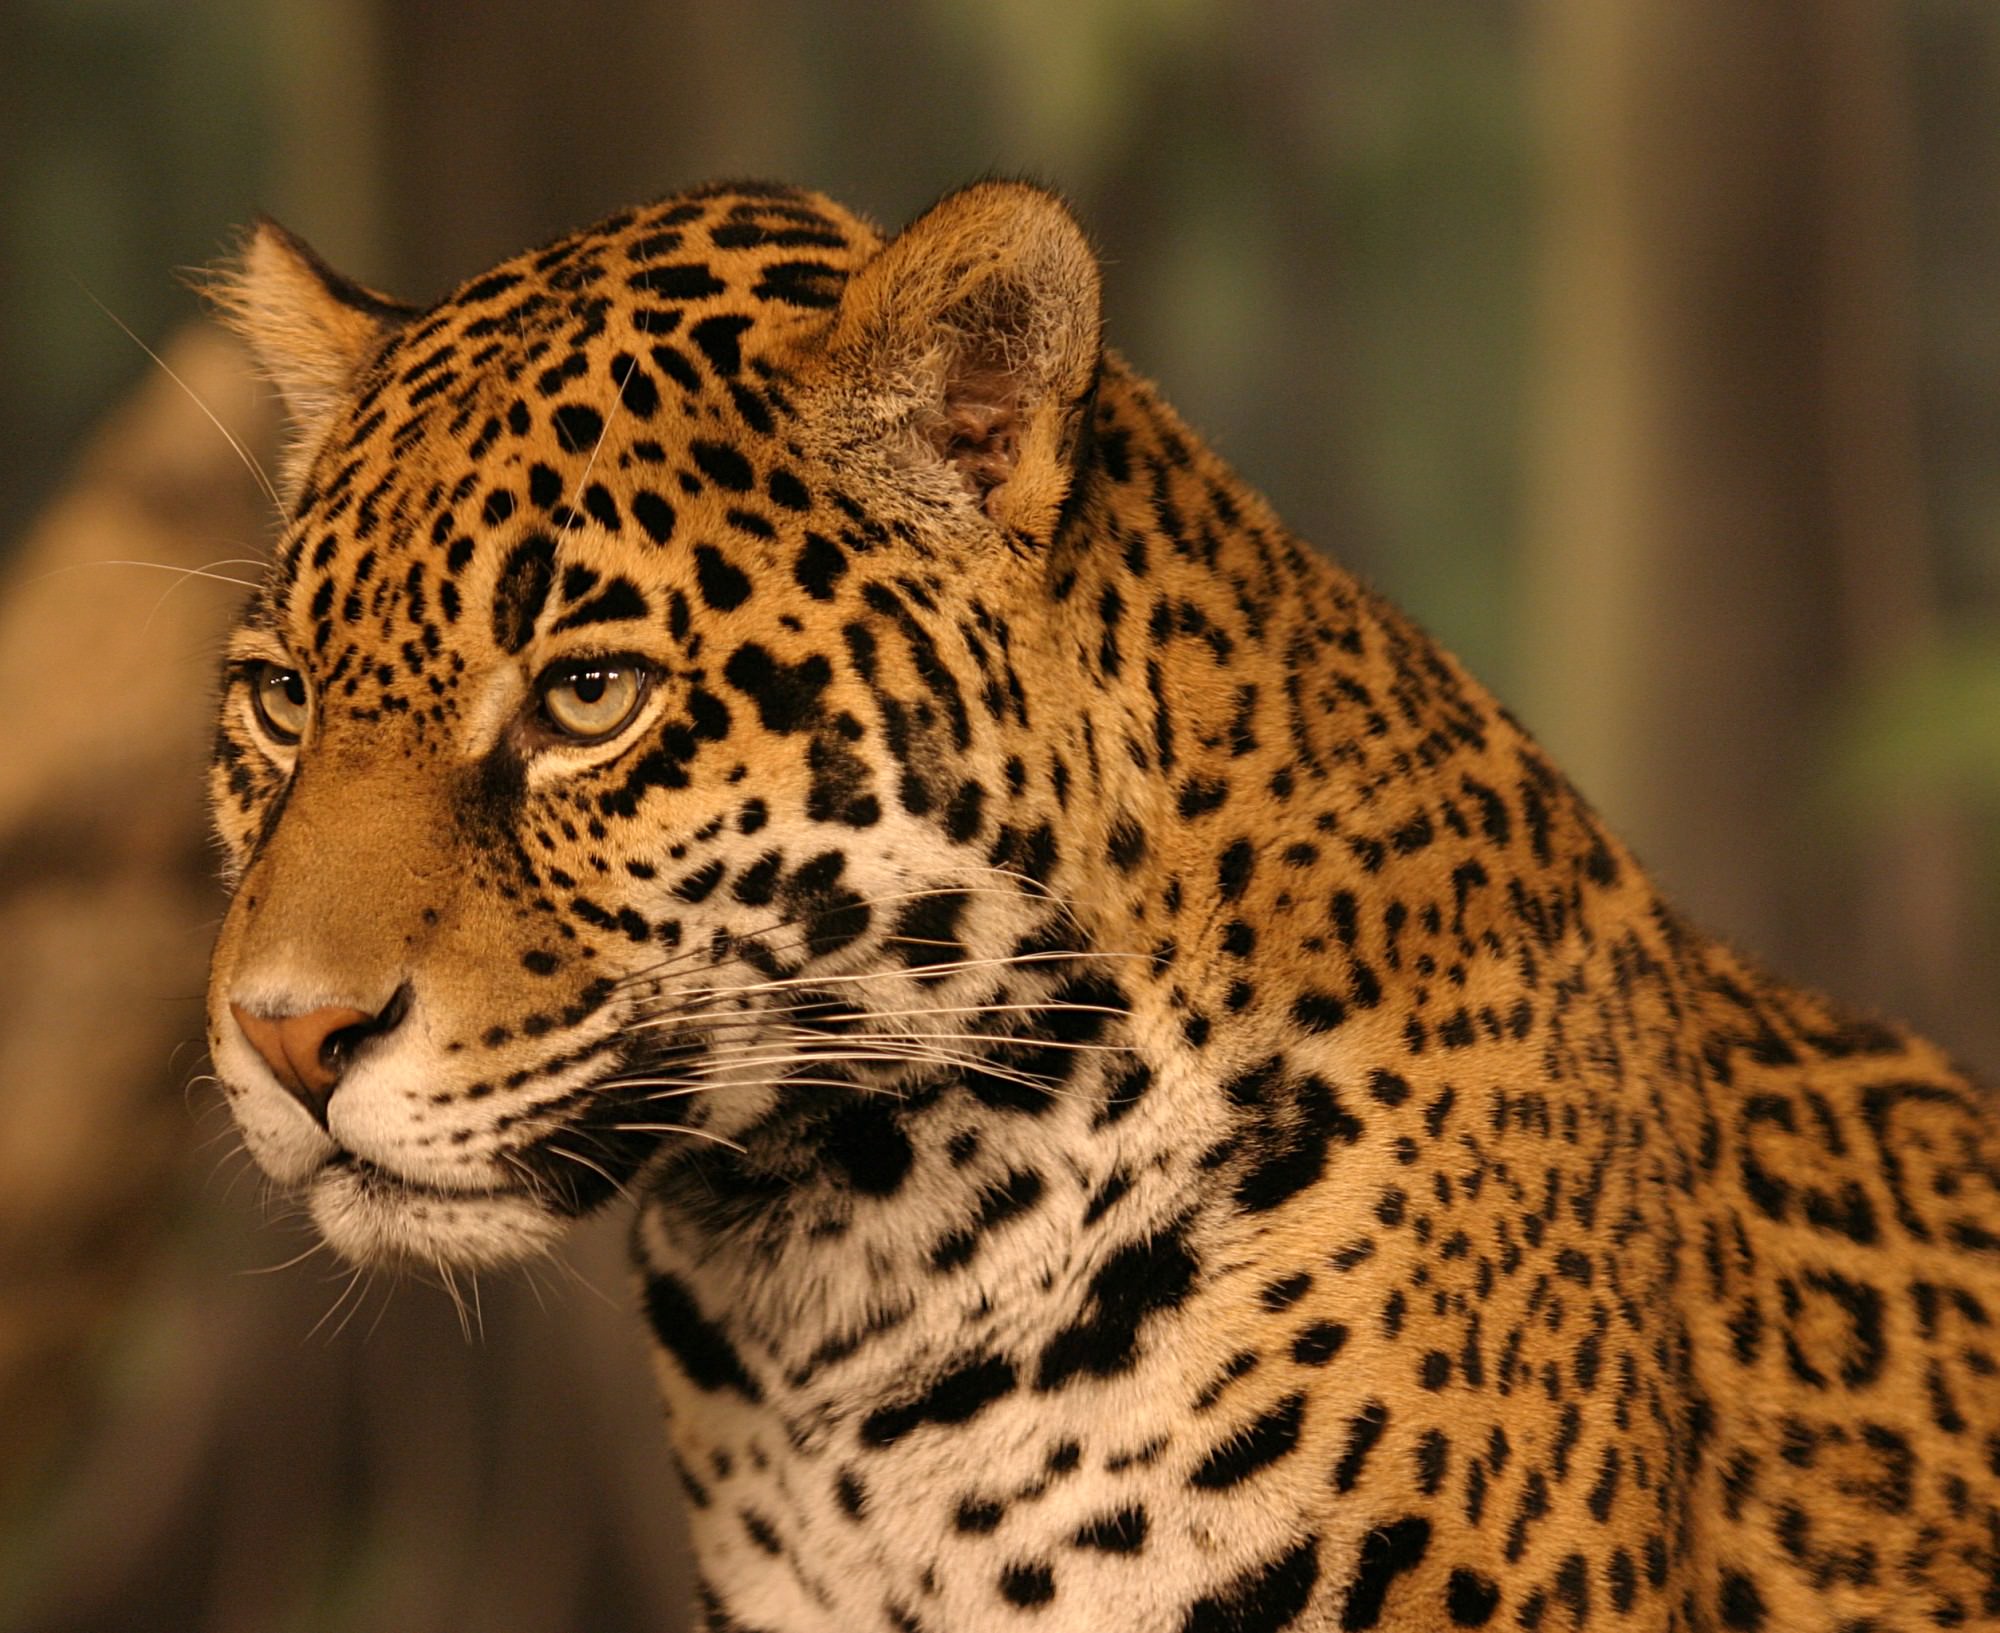 Wild Cats of Costa Rica - The Wildlife Diaries